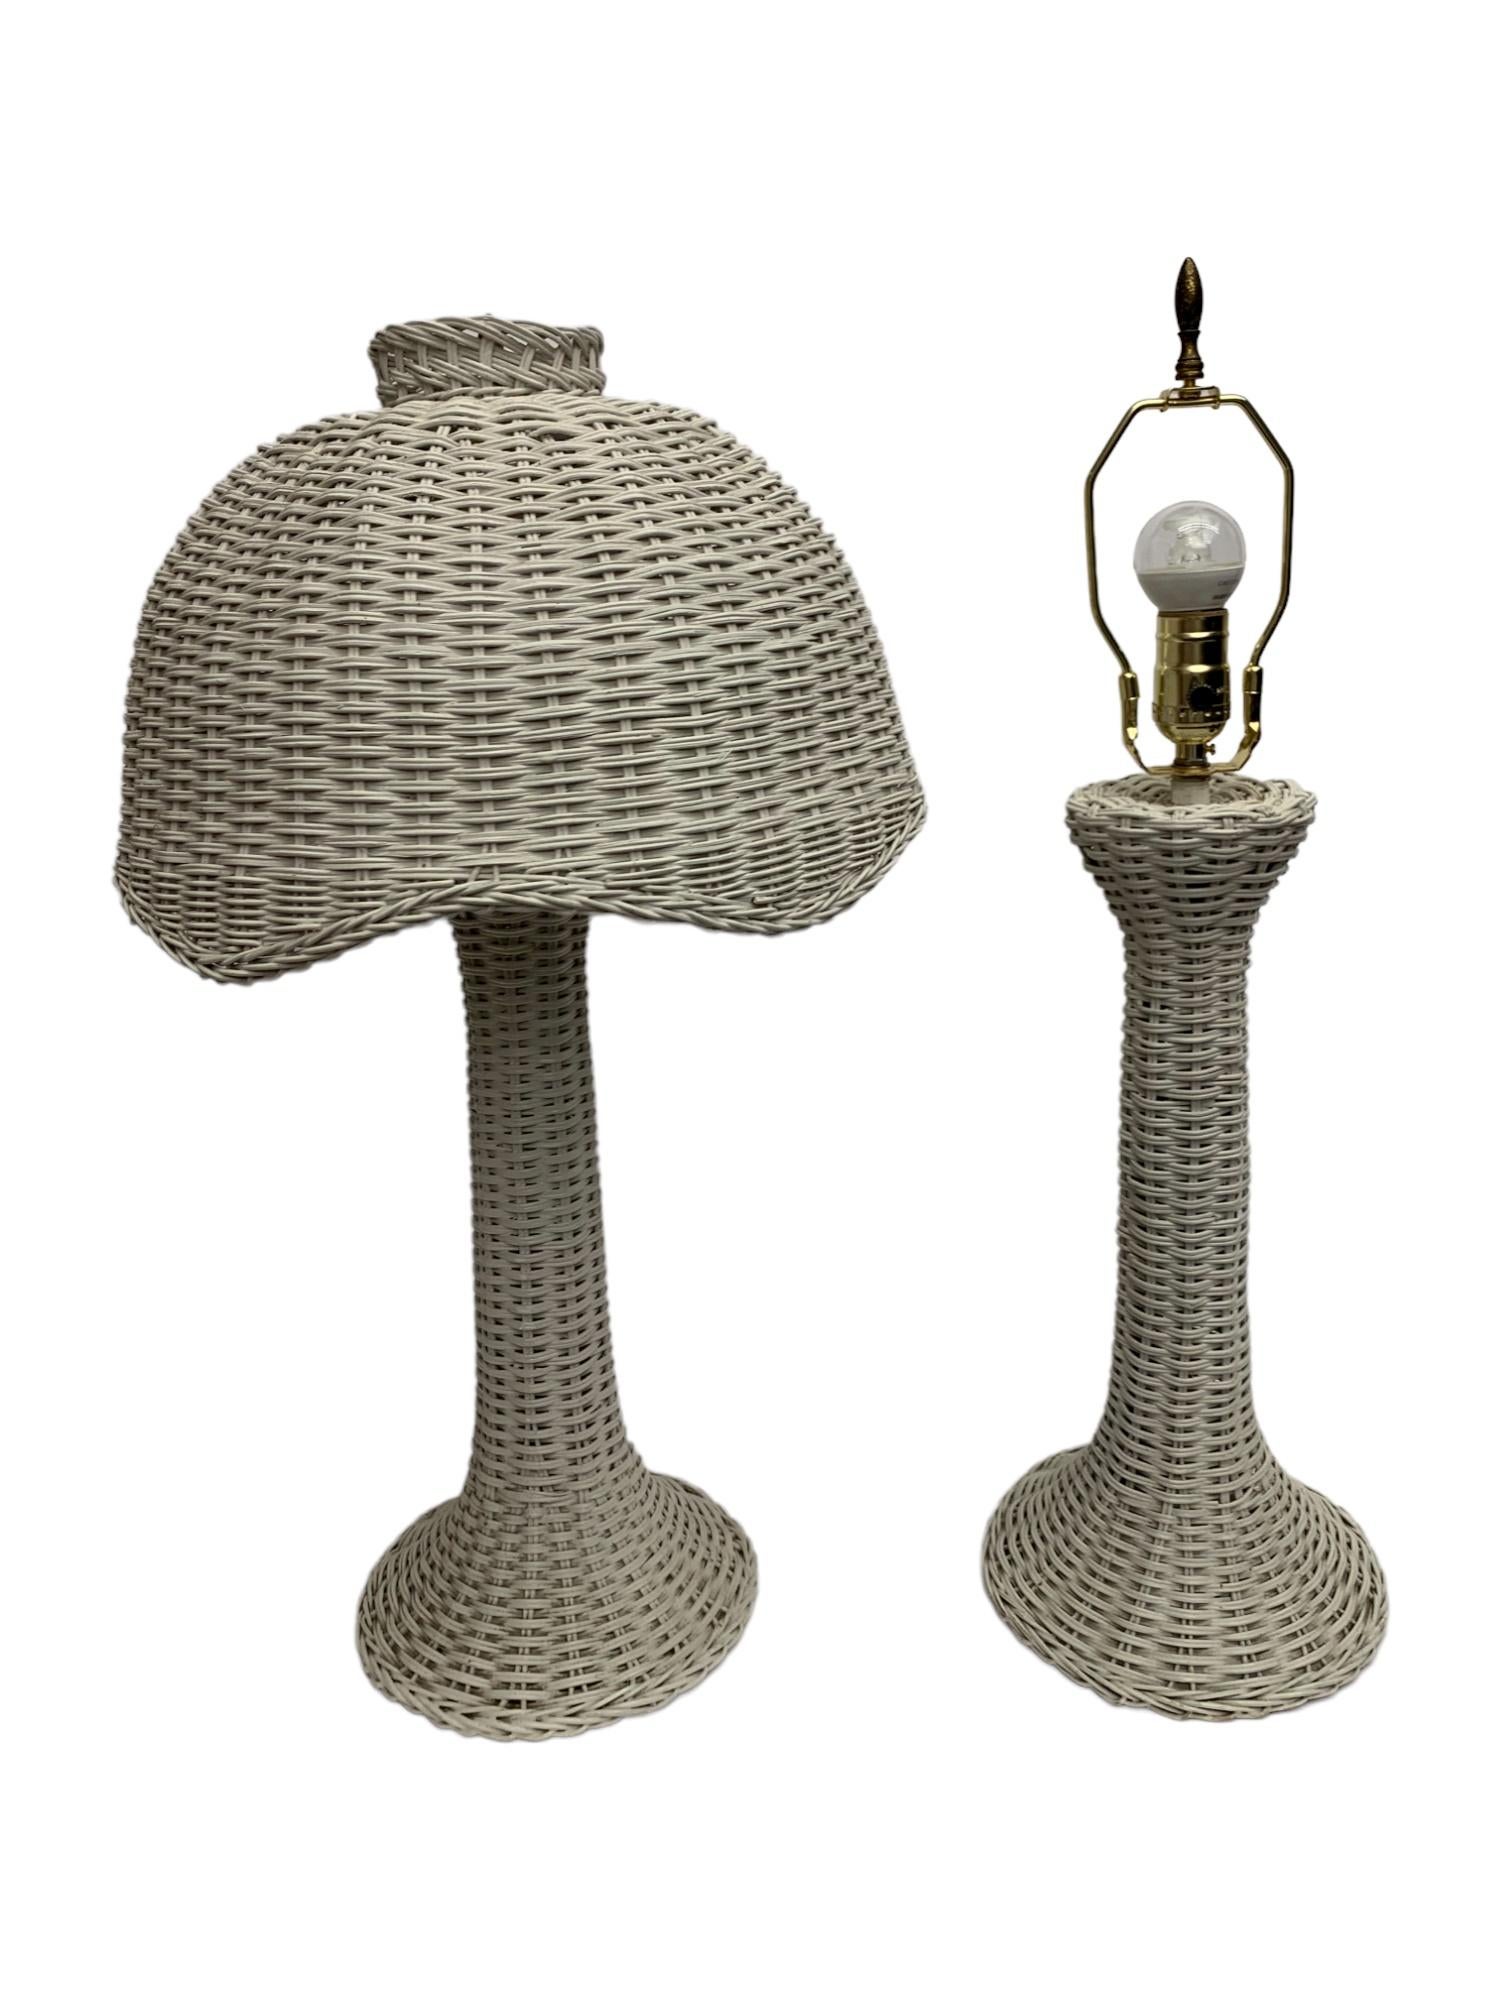 American 1950s Pair of Wicker Lamps